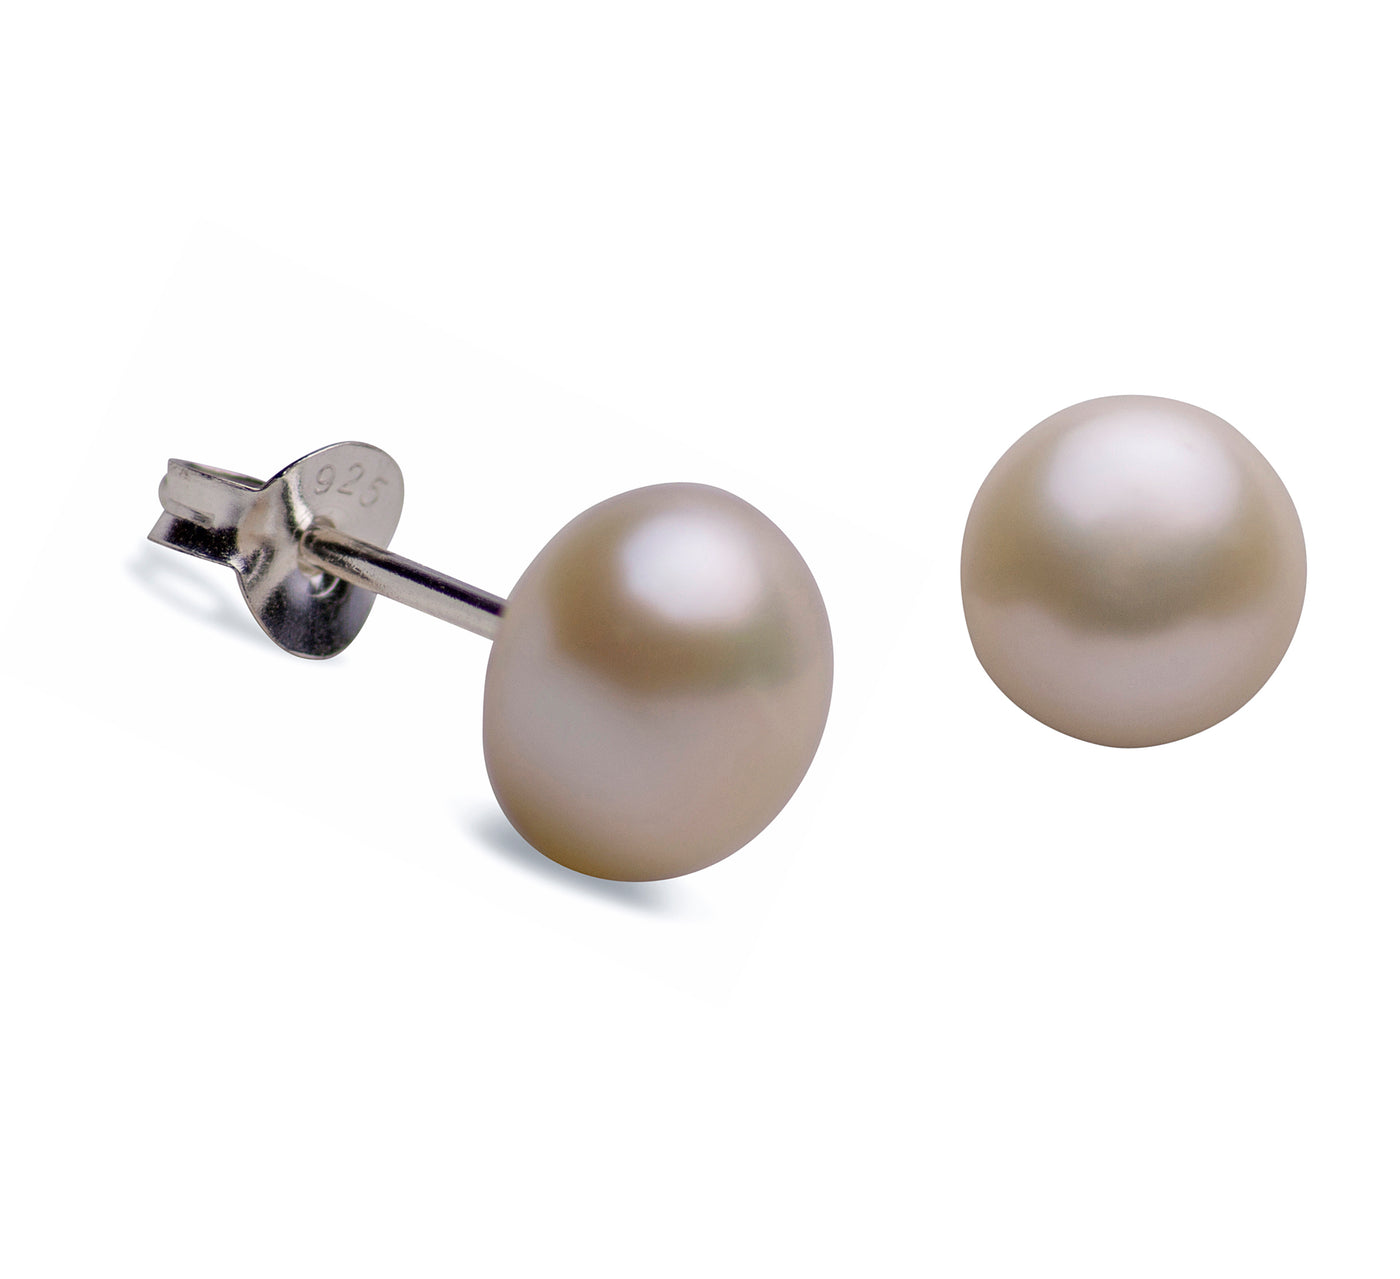 Classic White Cultured Pearl Earrings | SilverAndGold